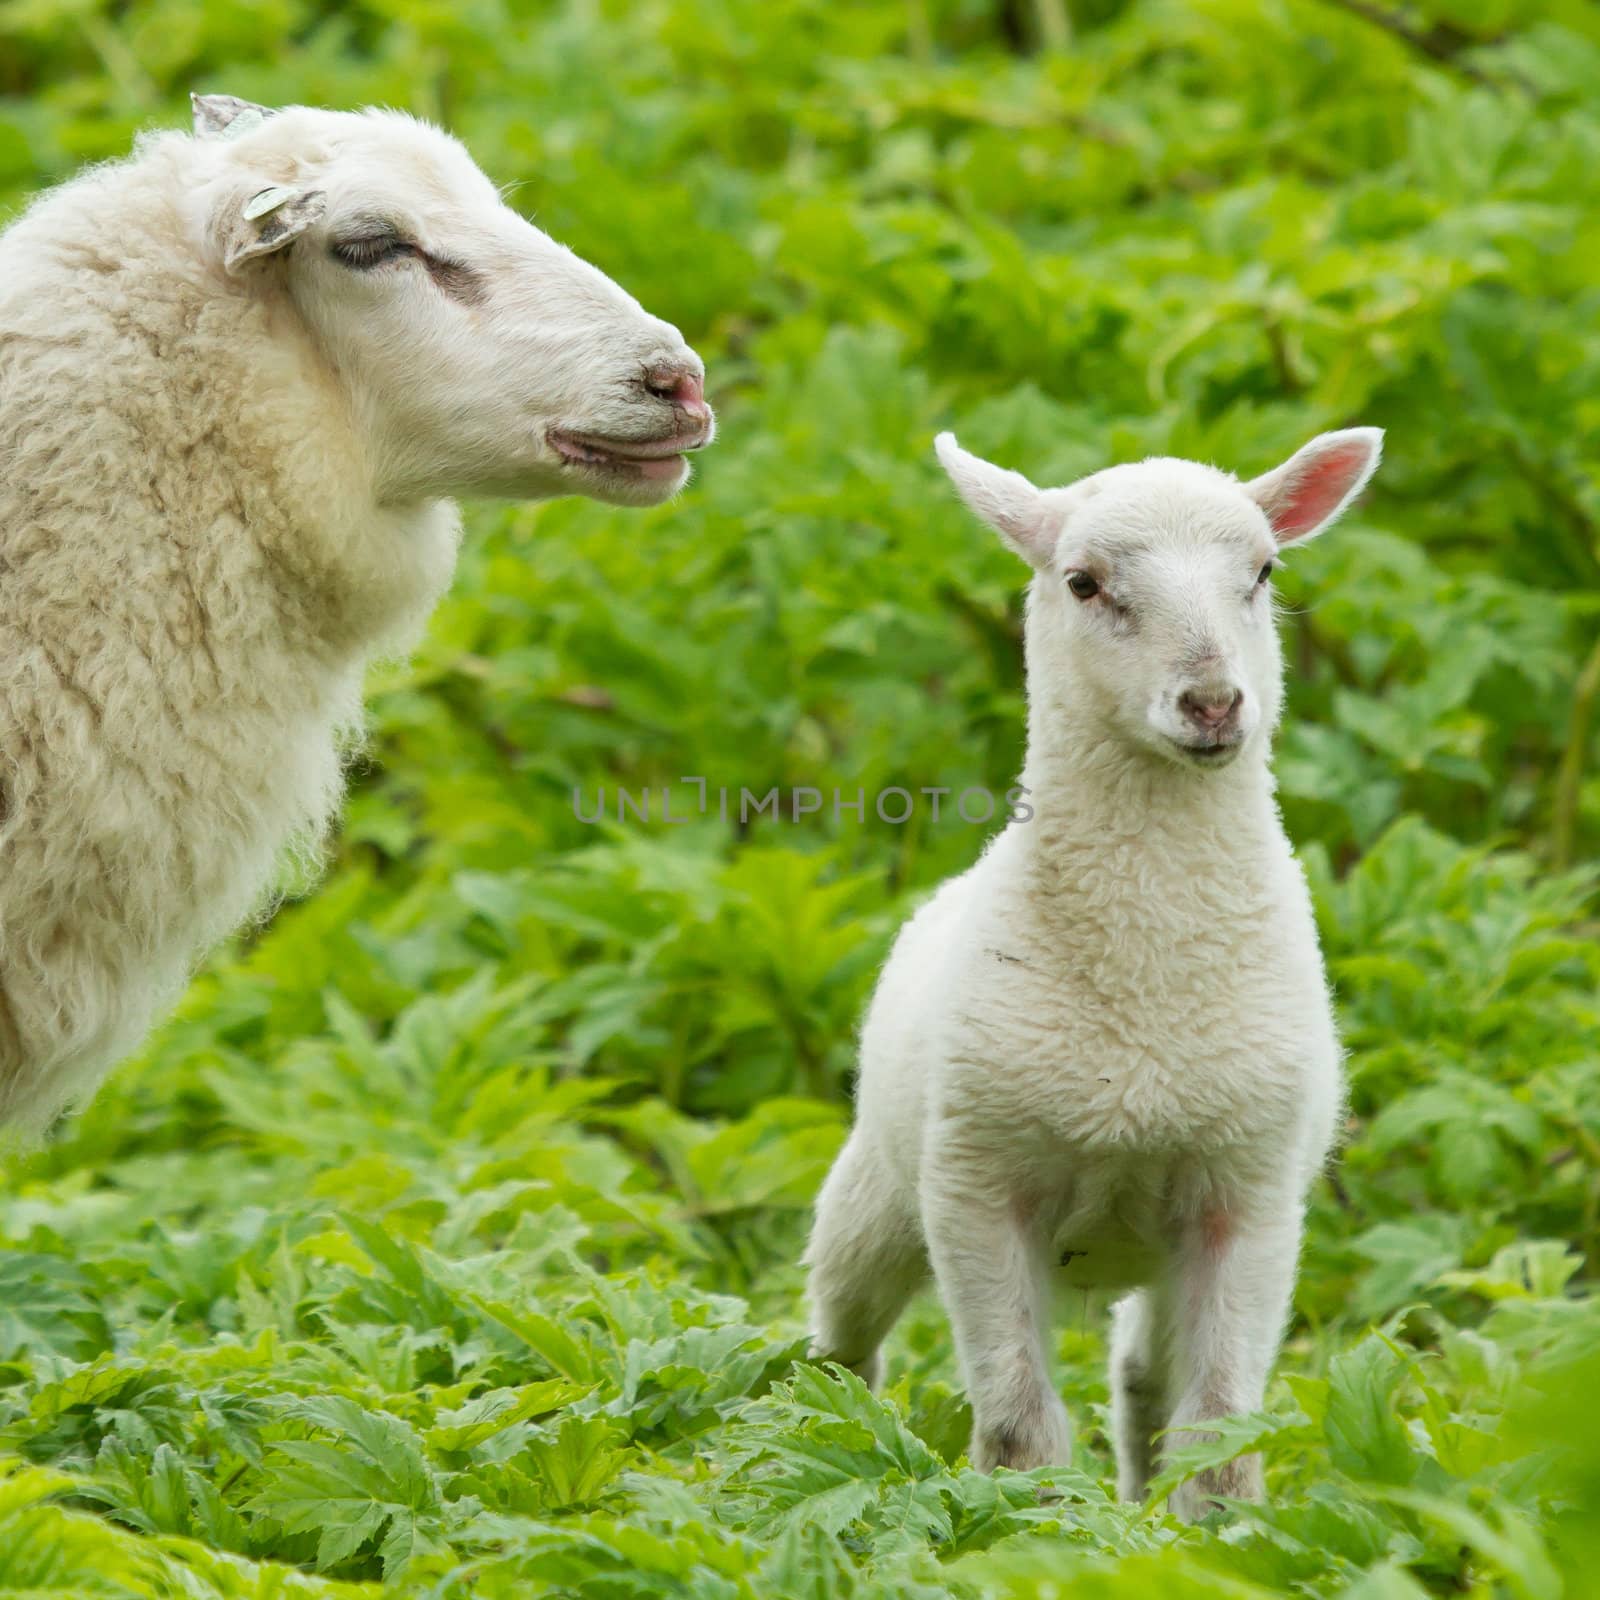 Little lamb by michaklootwijk